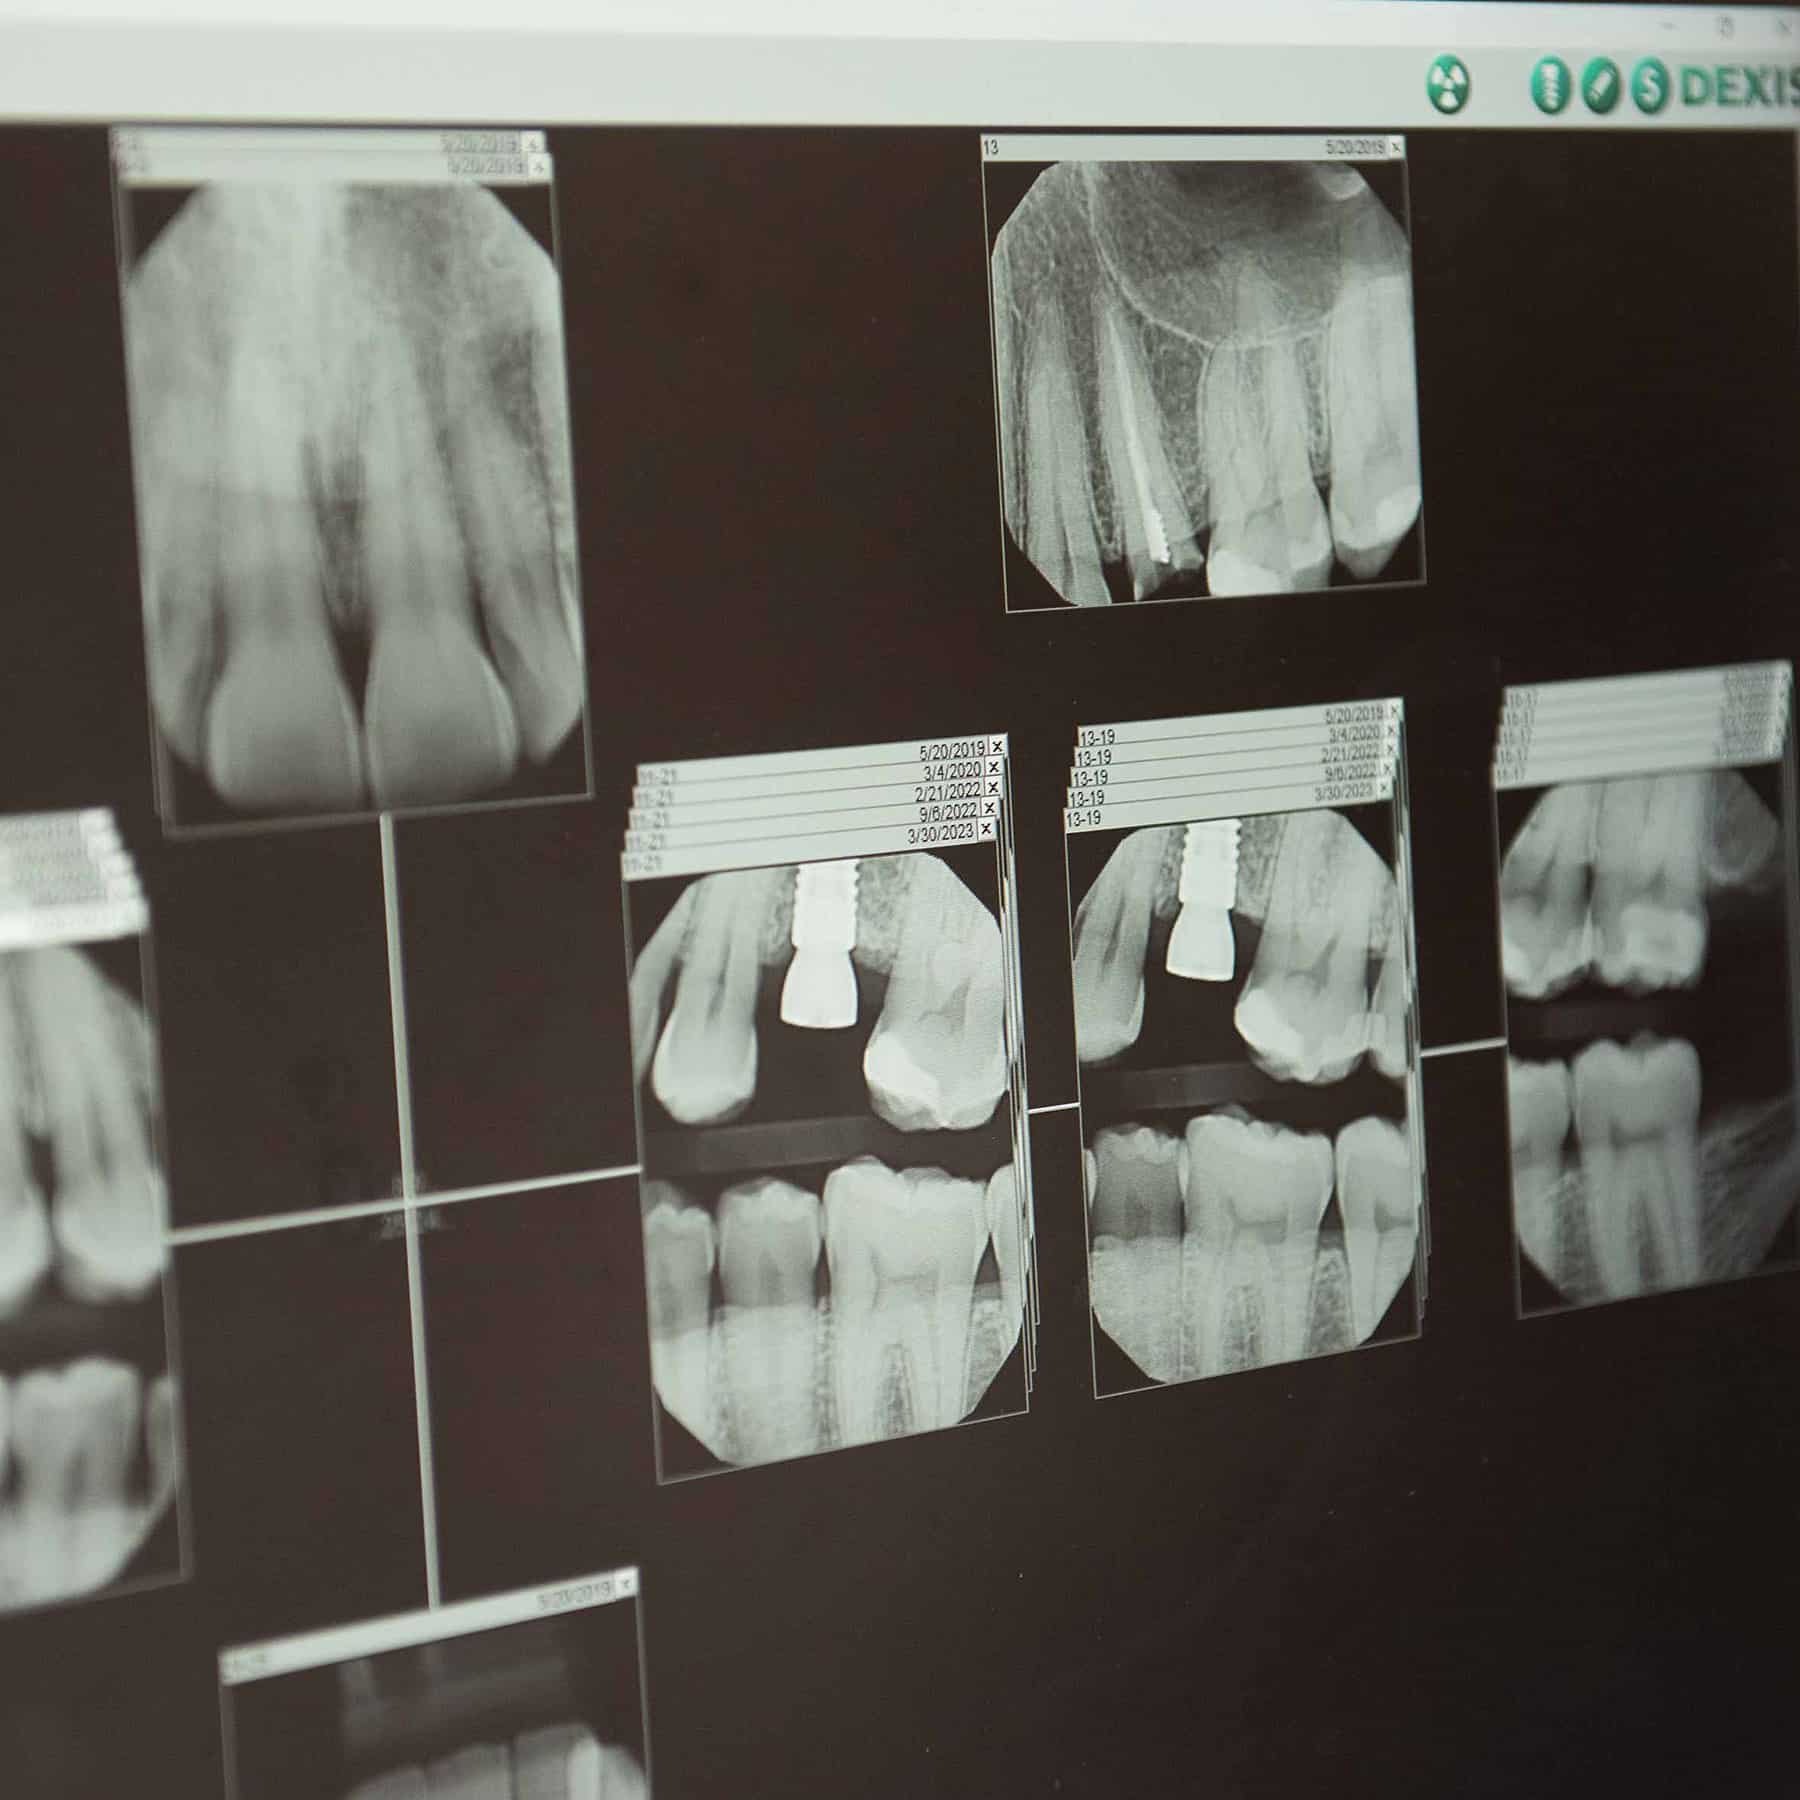 X-rays of dental implants